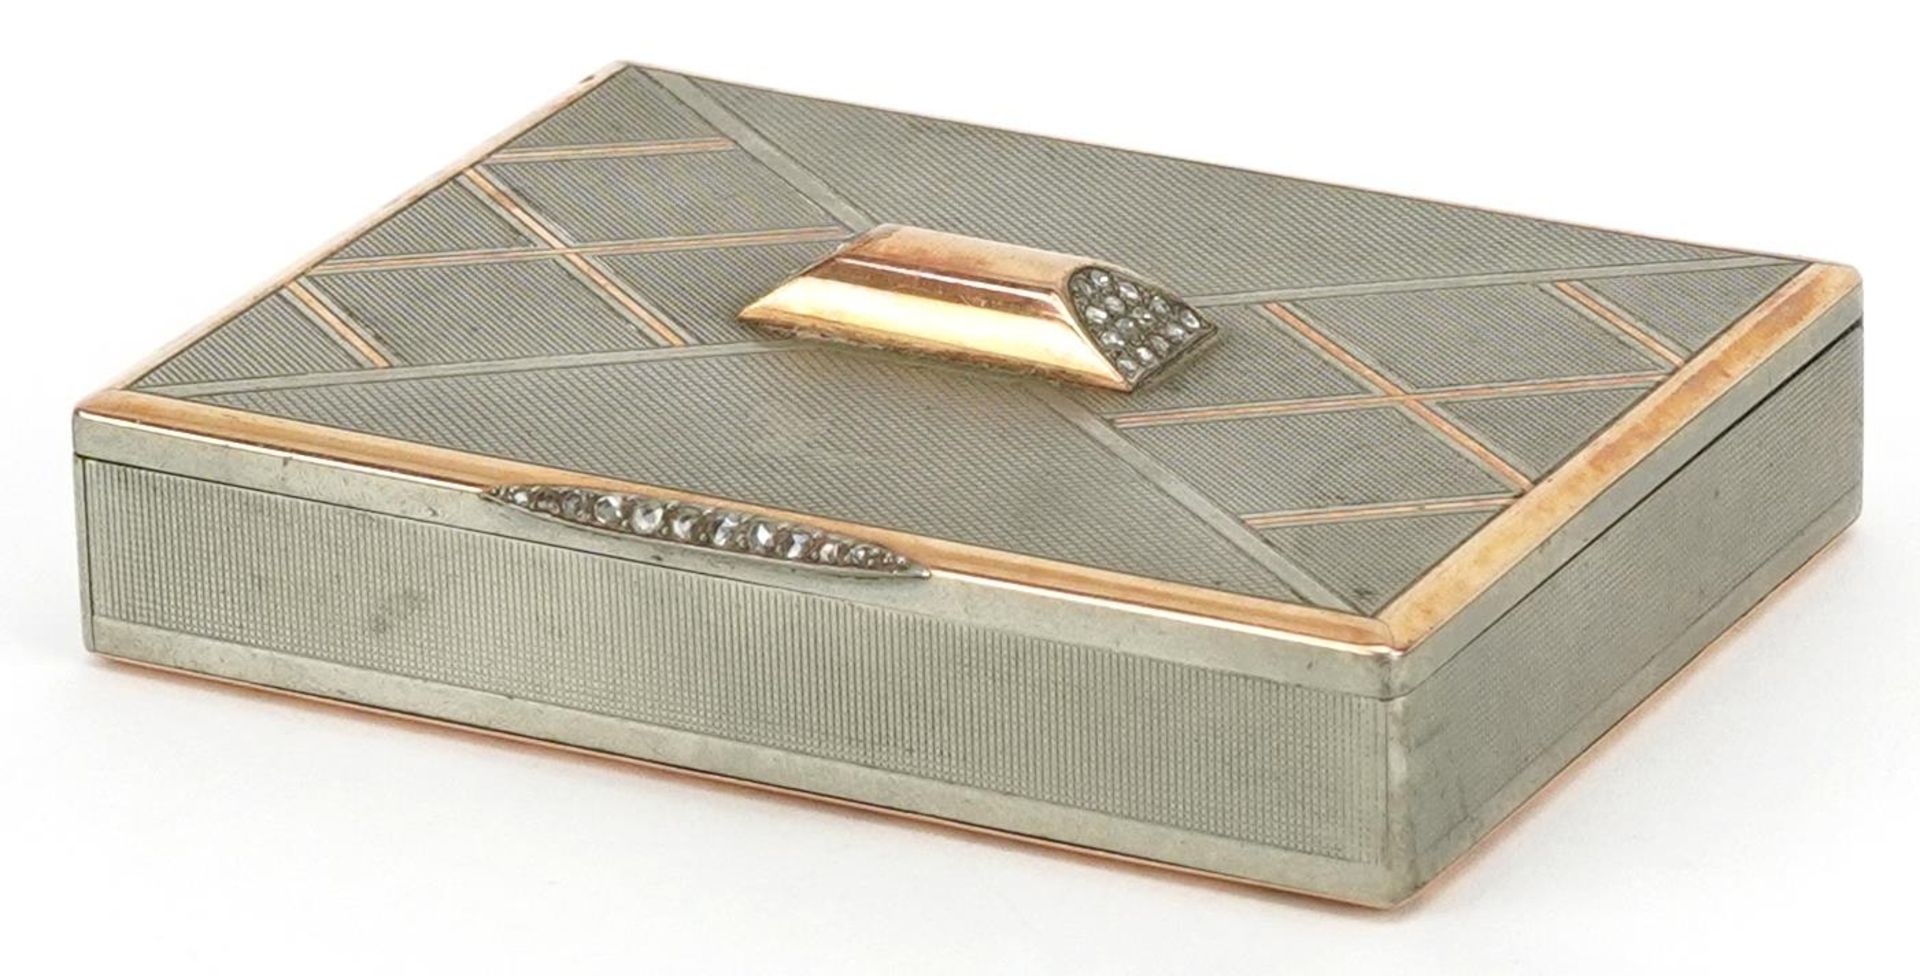 Van Cleef & Arpels, Art Deco Styptor engine turned diamond set minaudiere with rose gold overlay,